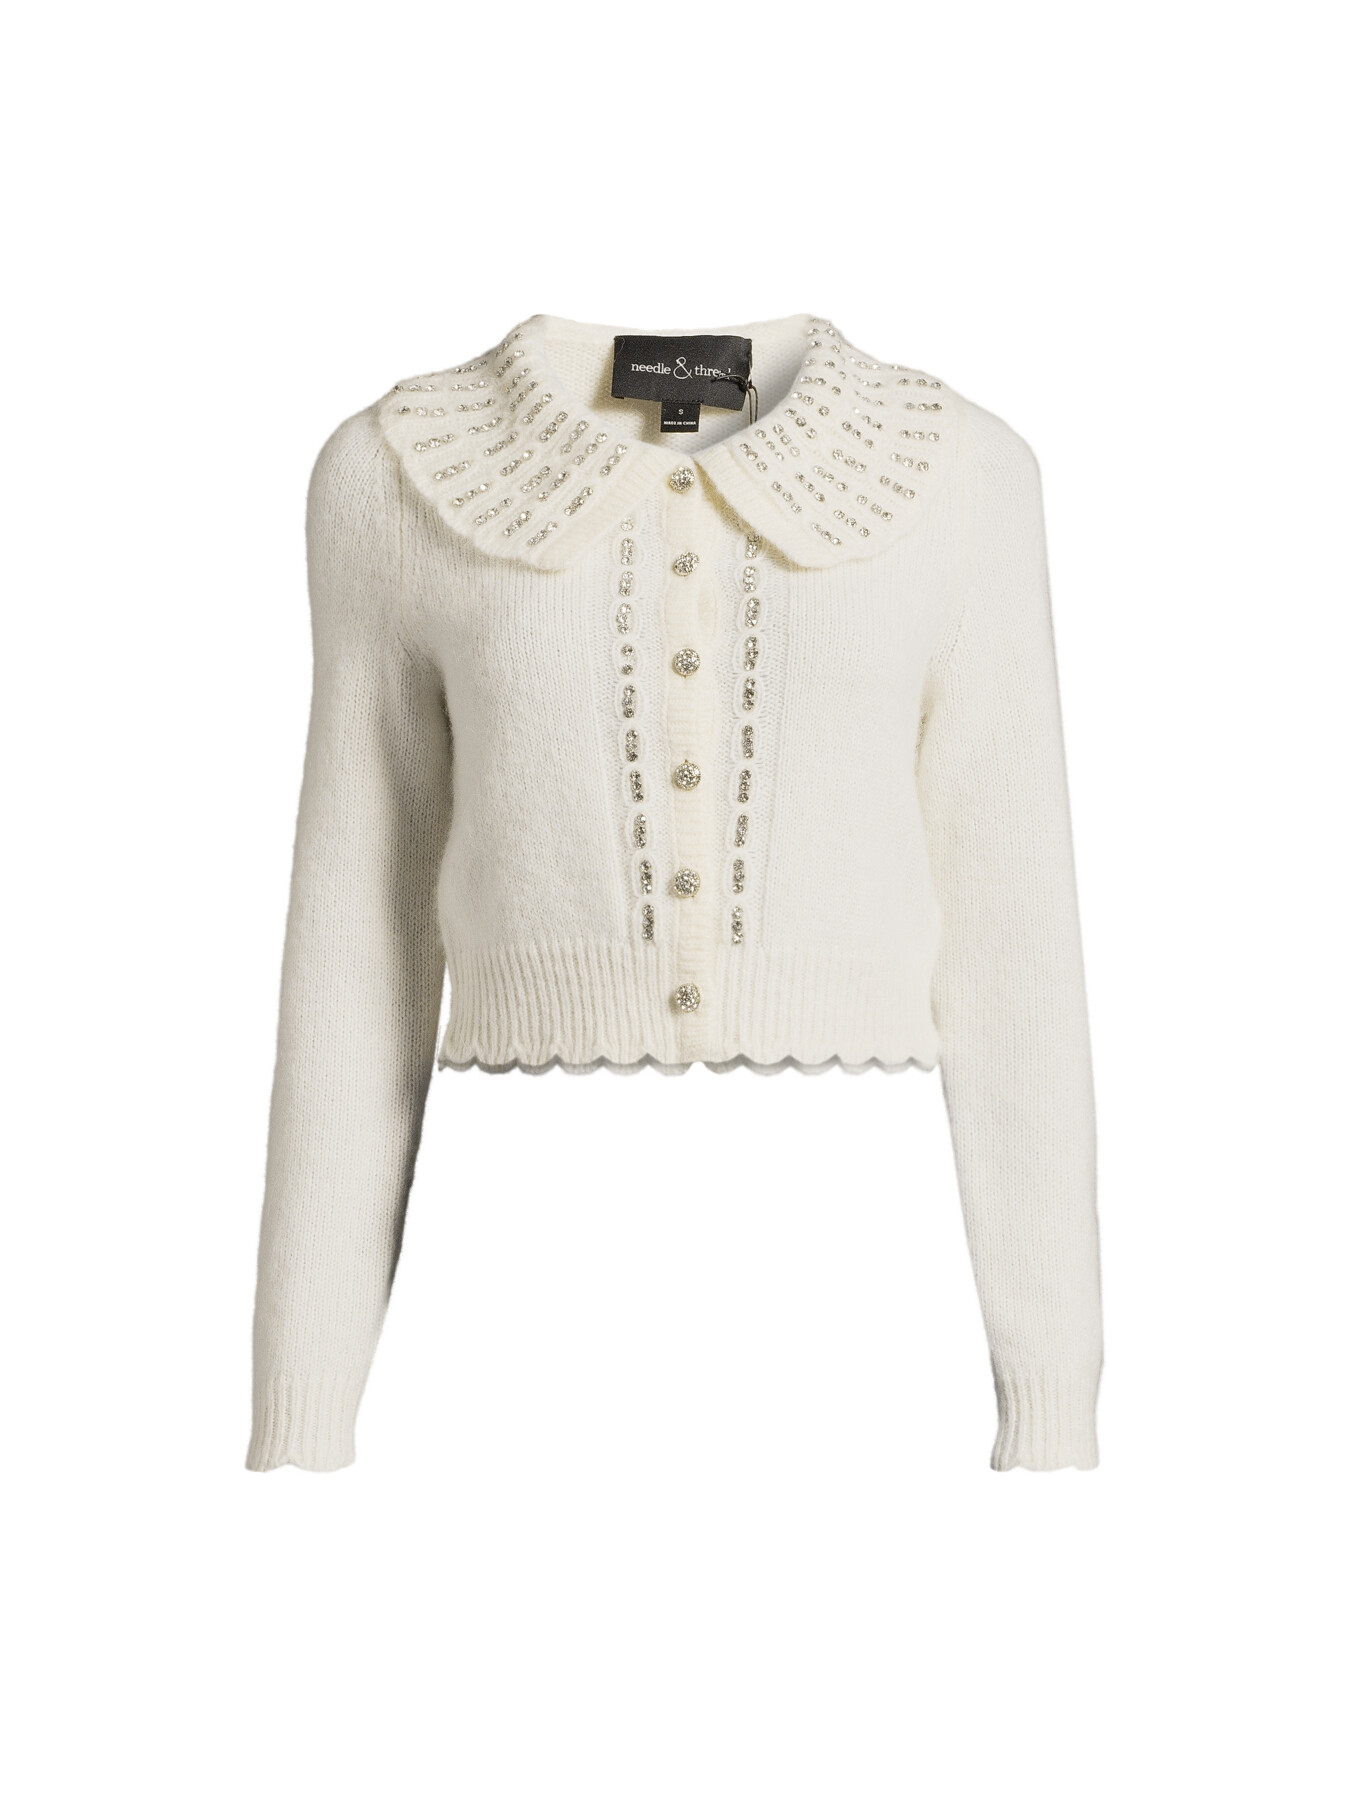 Shop Needle & Thread Women's Embellished Collar Short Cardigan White